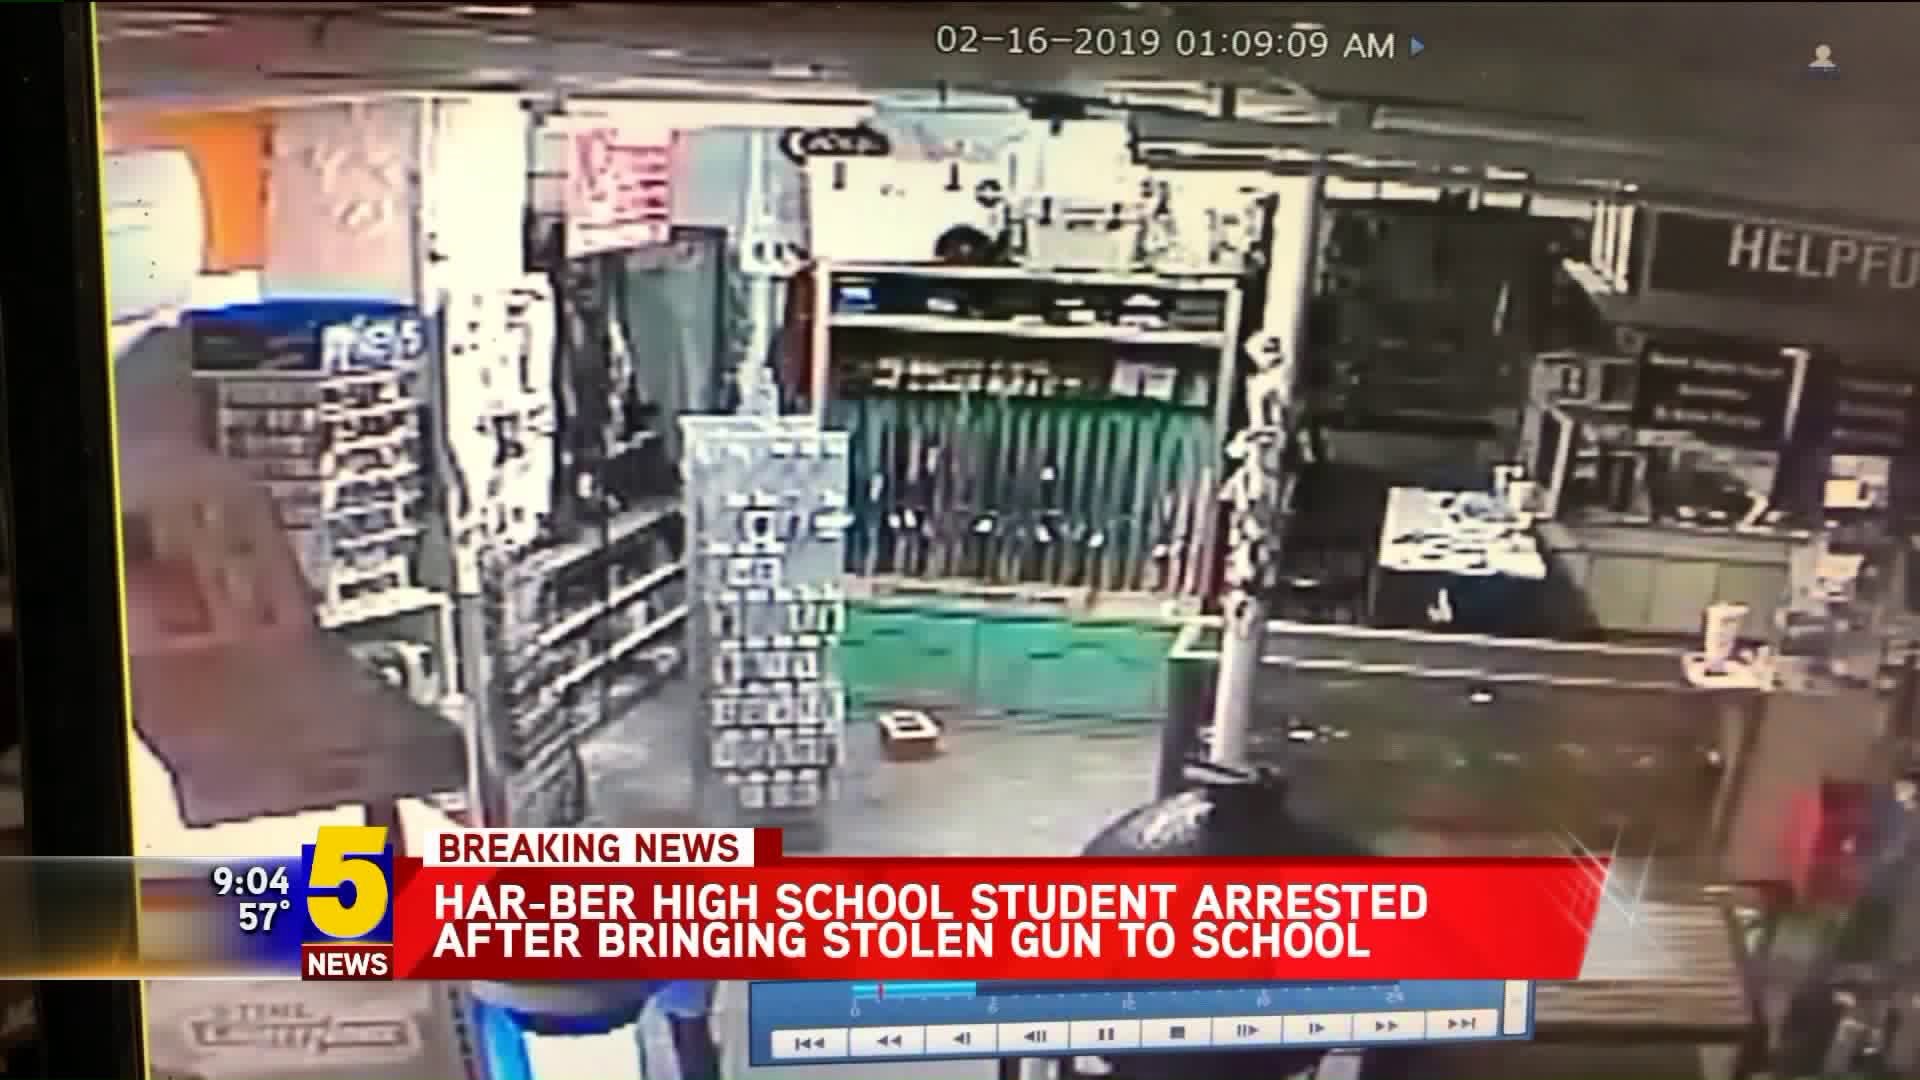 Harber High School Student Arrested After Bringing Stolen Gun To School